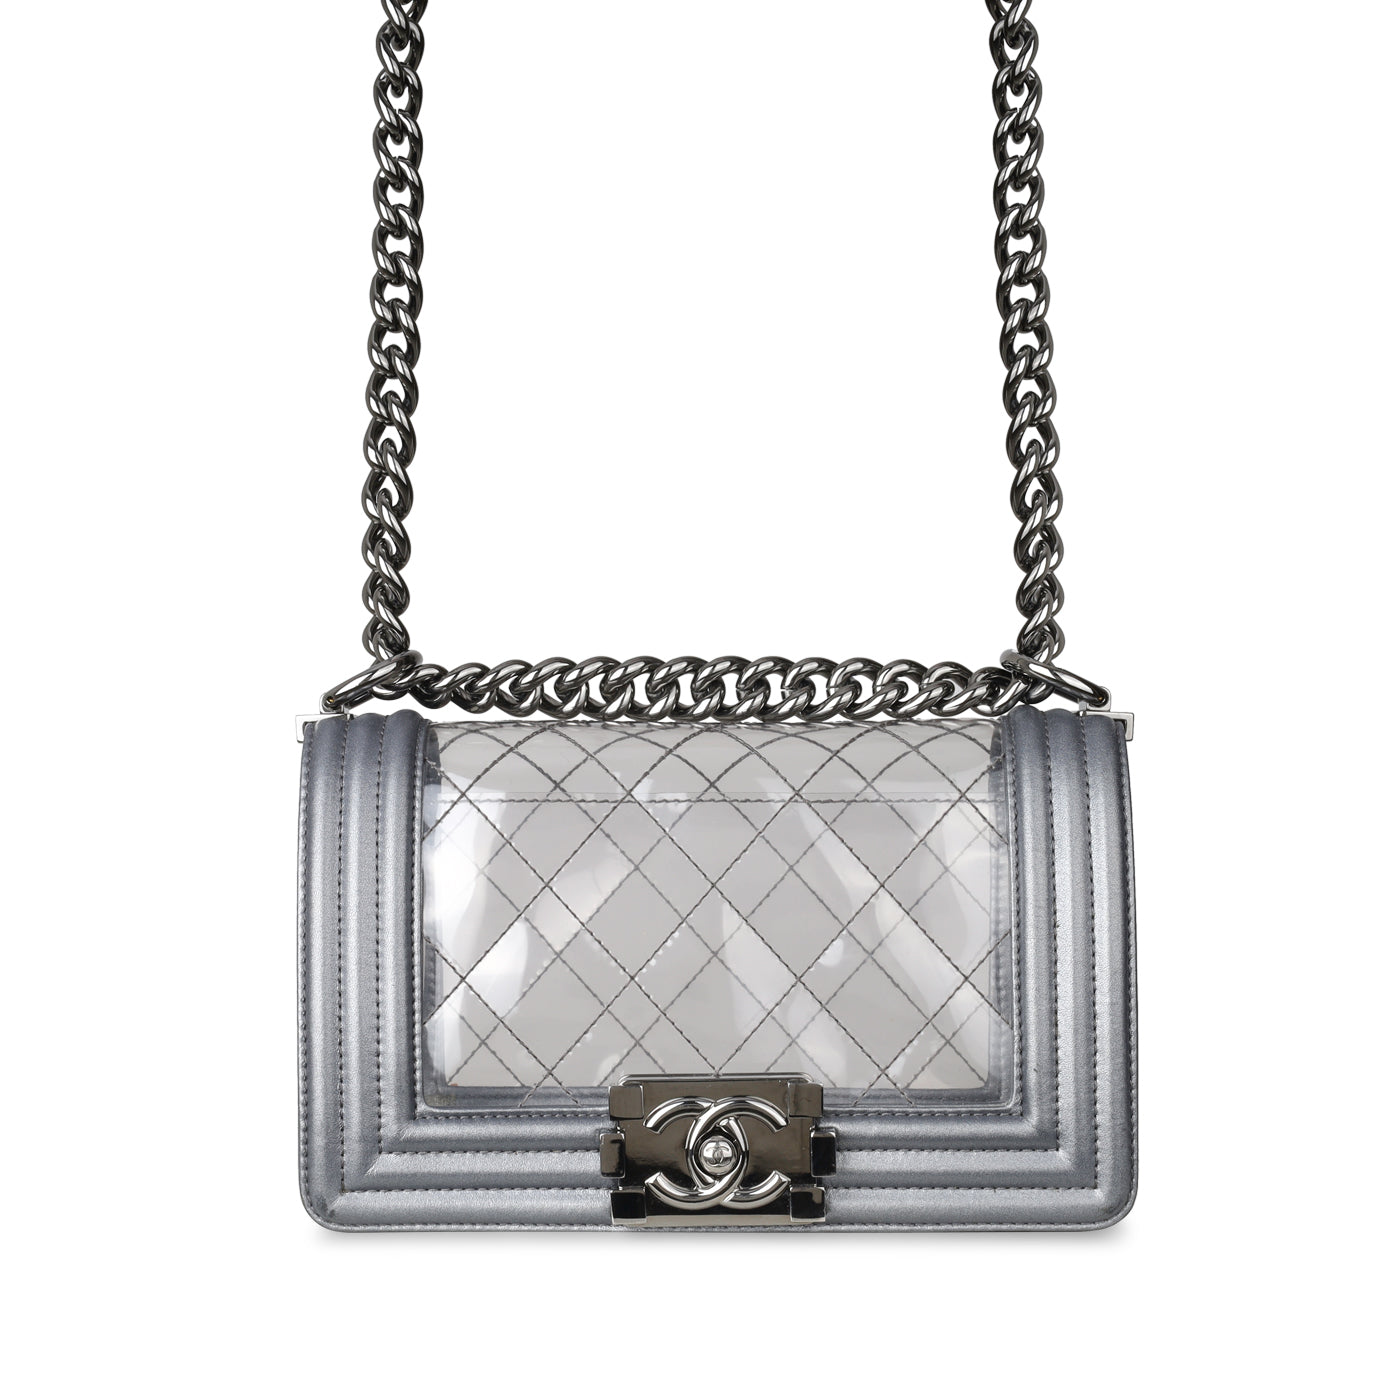 Chanel - Small Boy Bag - Transparent - Ruthenium Hardware - Pre-Loved